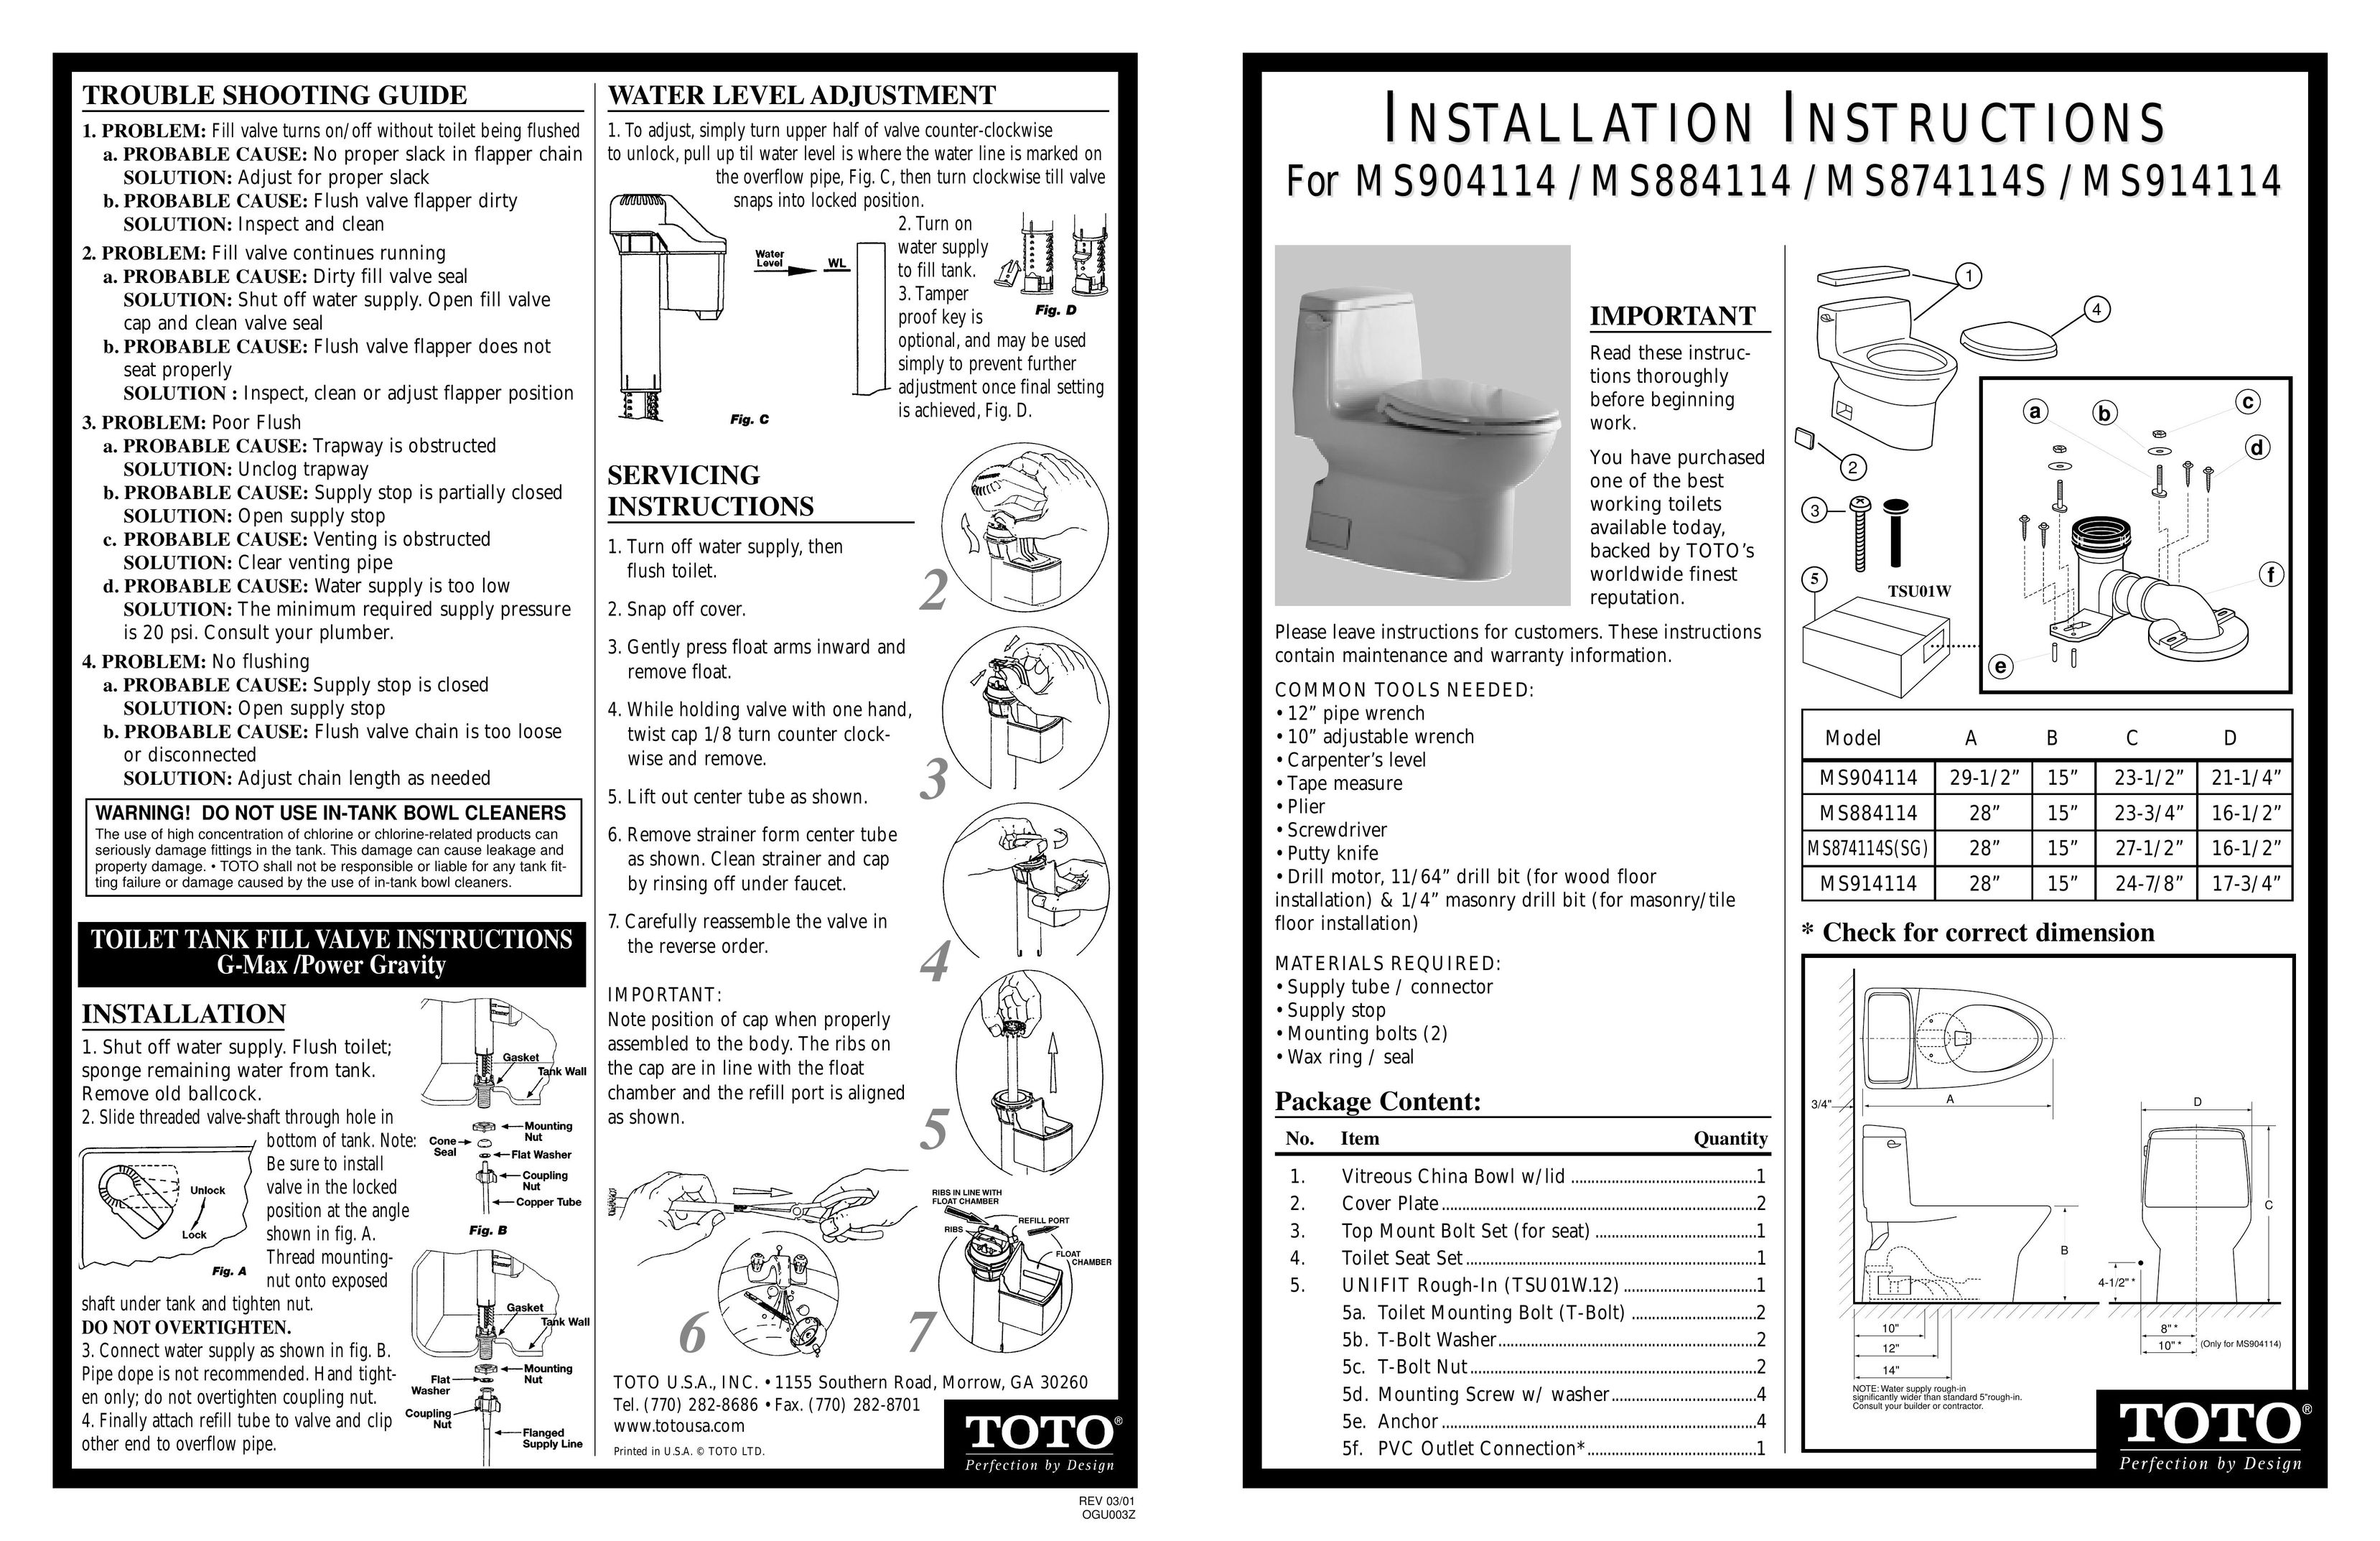 Toto MS884114 Plumbing Product User Manual